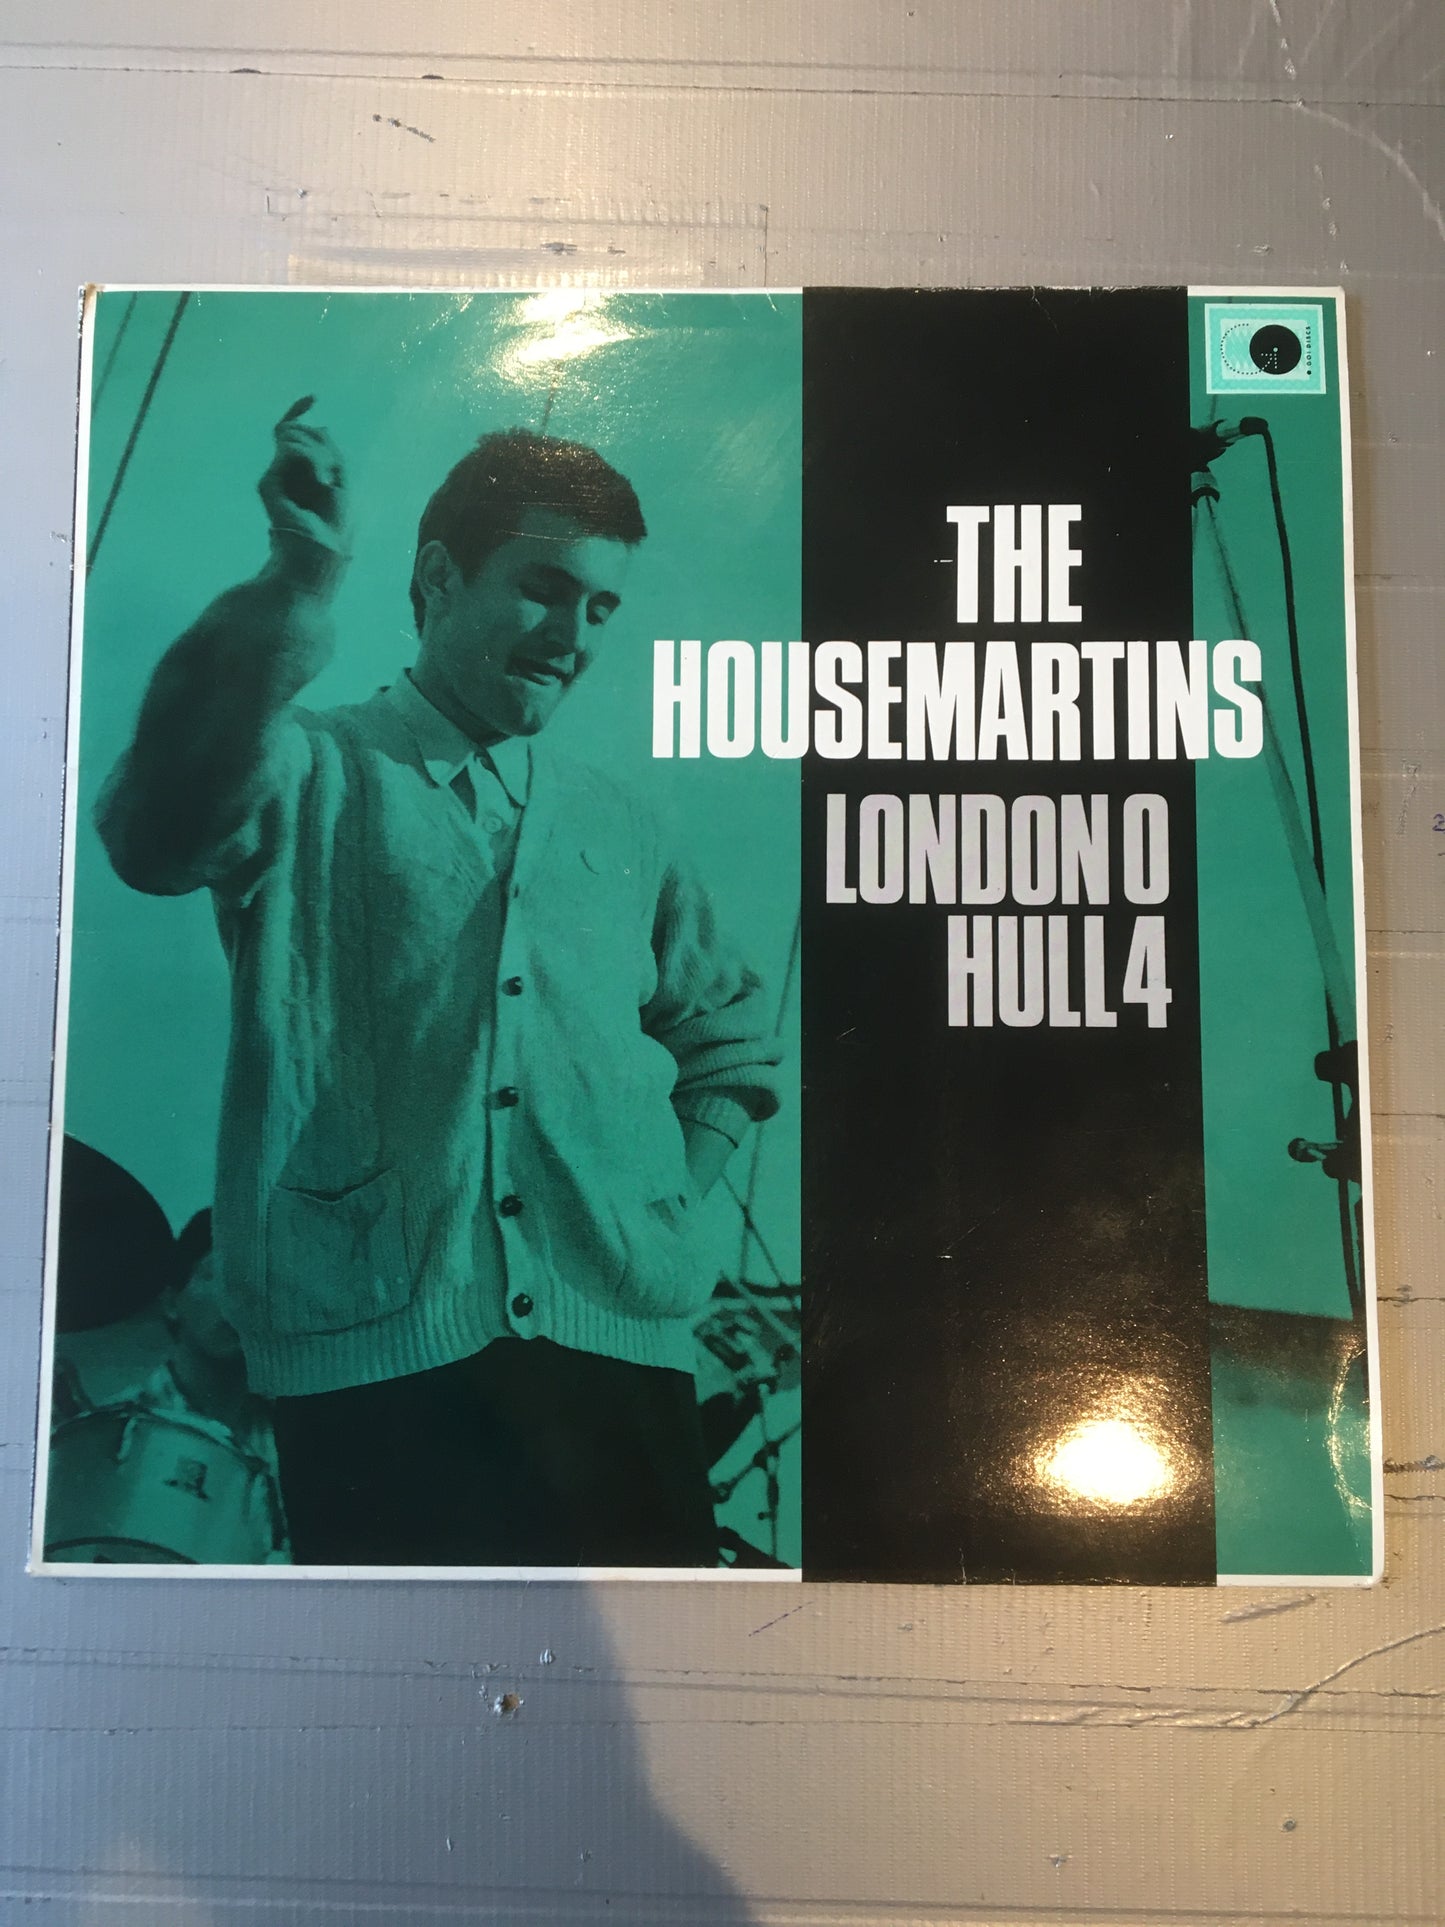 The HOUSEMARTINS LP LONDON 0 HULL 4